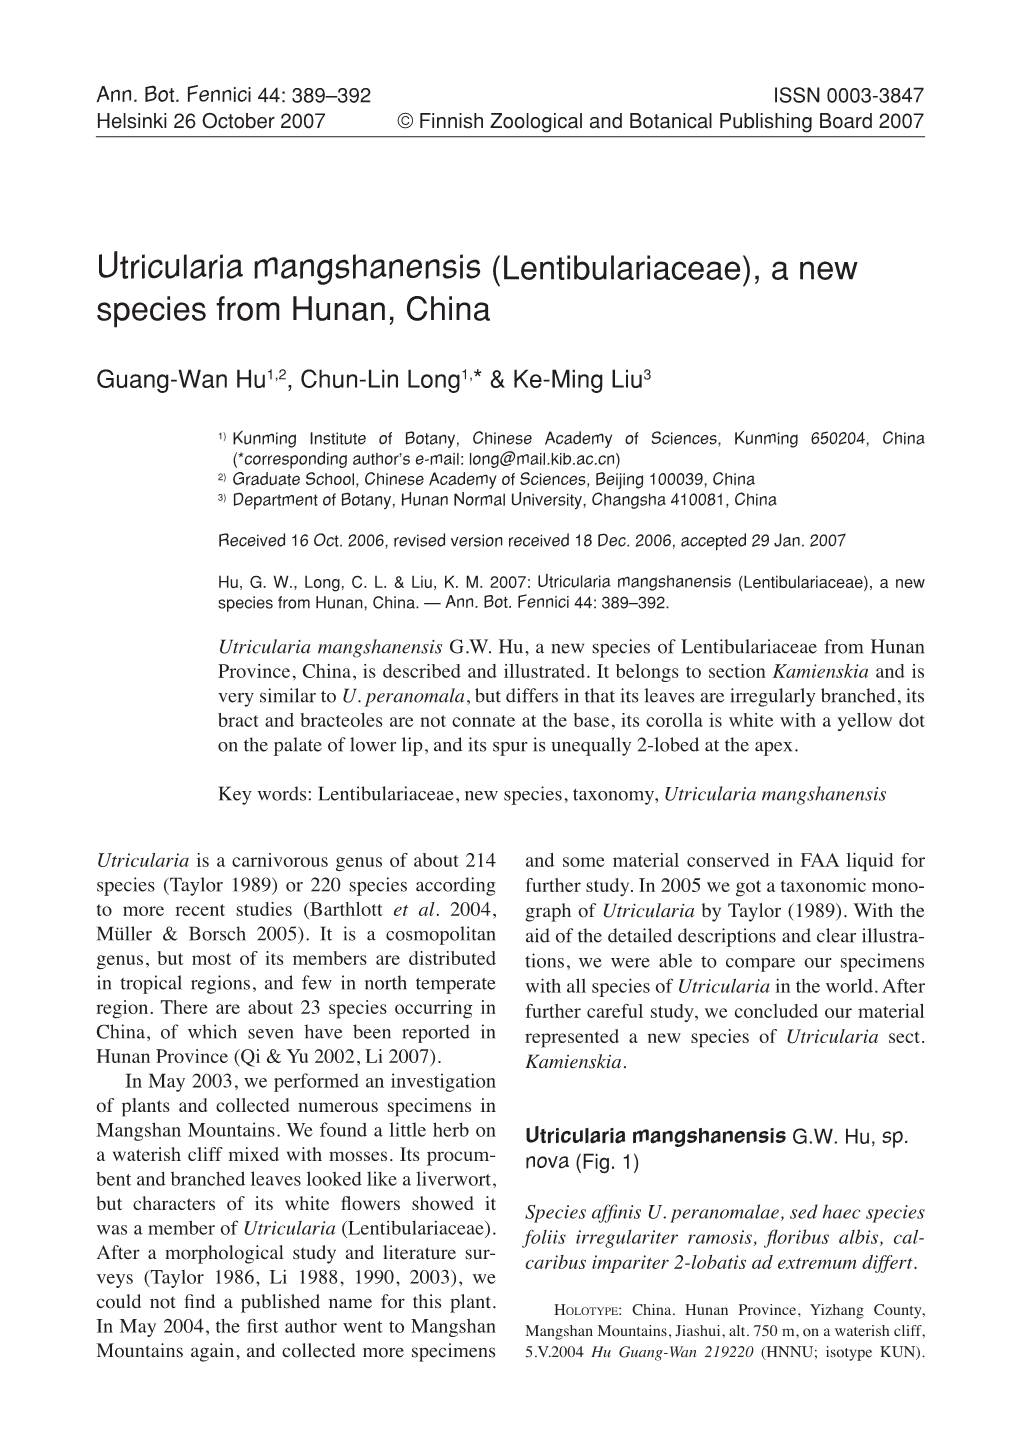 Utricularia Mangshanensis (Lentibulariaceae), a New Species from Hunan, China